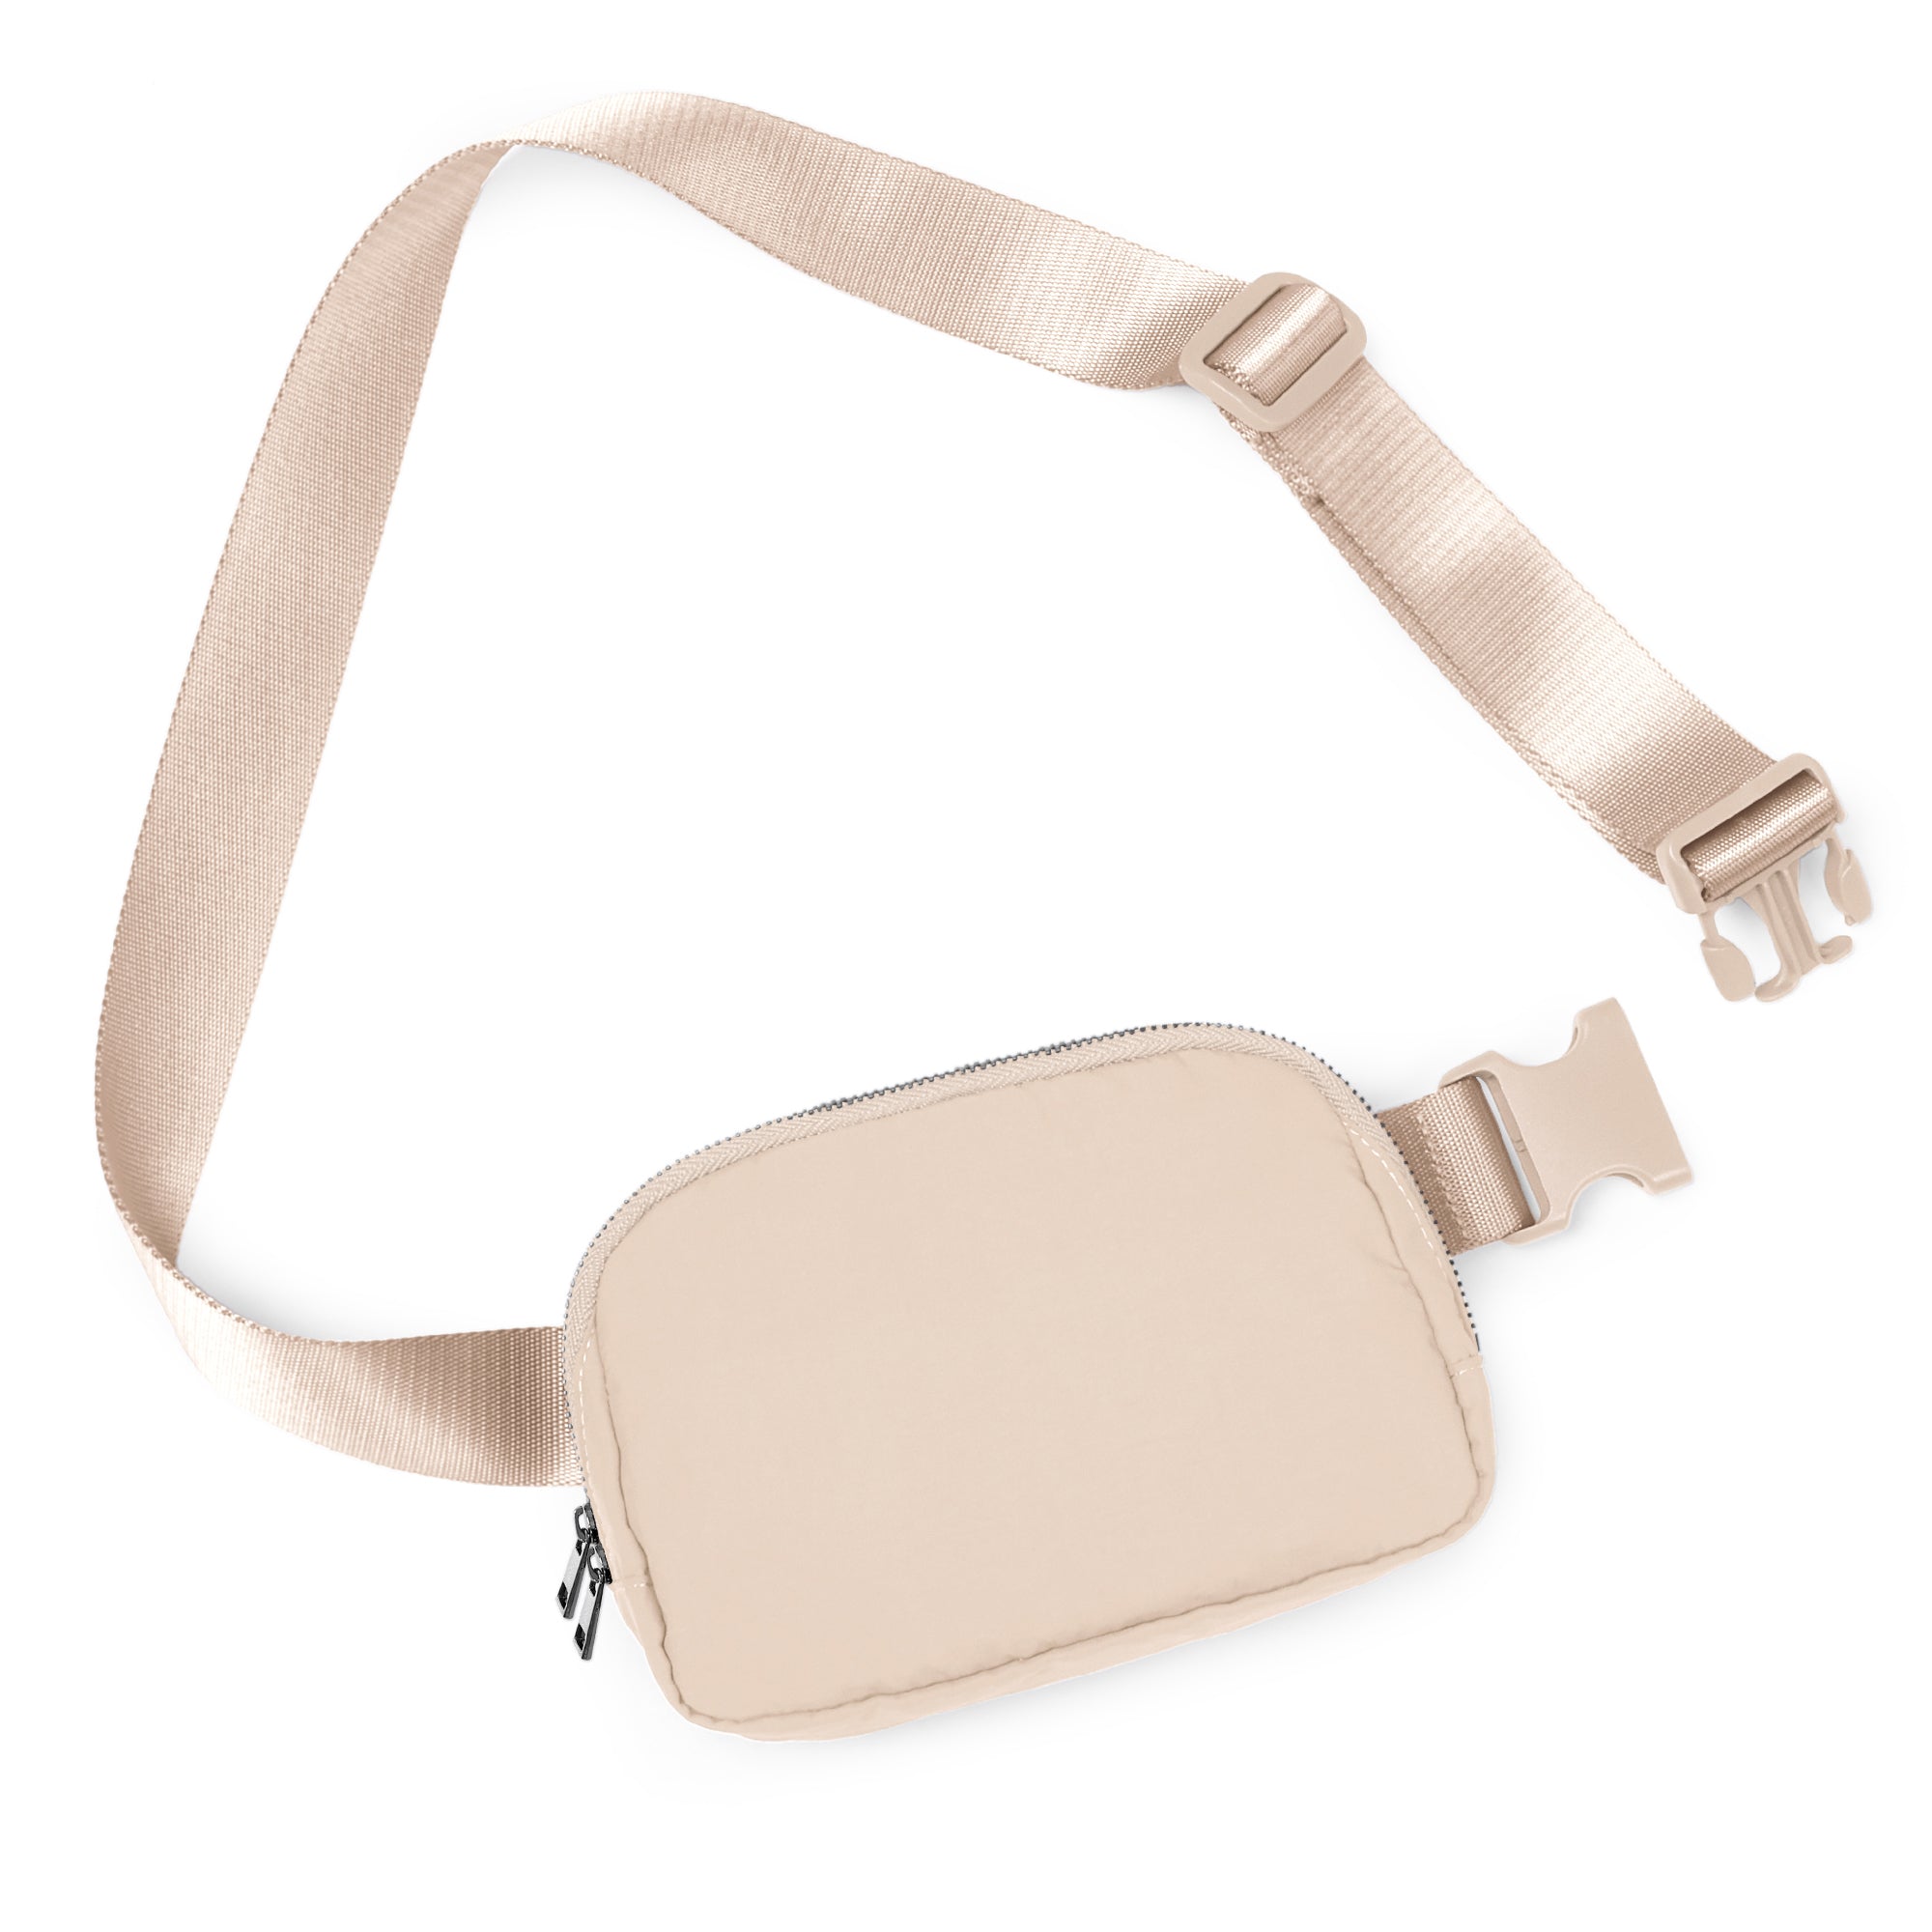 Unisex Two-Way Zip Mini Belt Bag Lrish Cream 8" x 2" x 5.5" - ododos